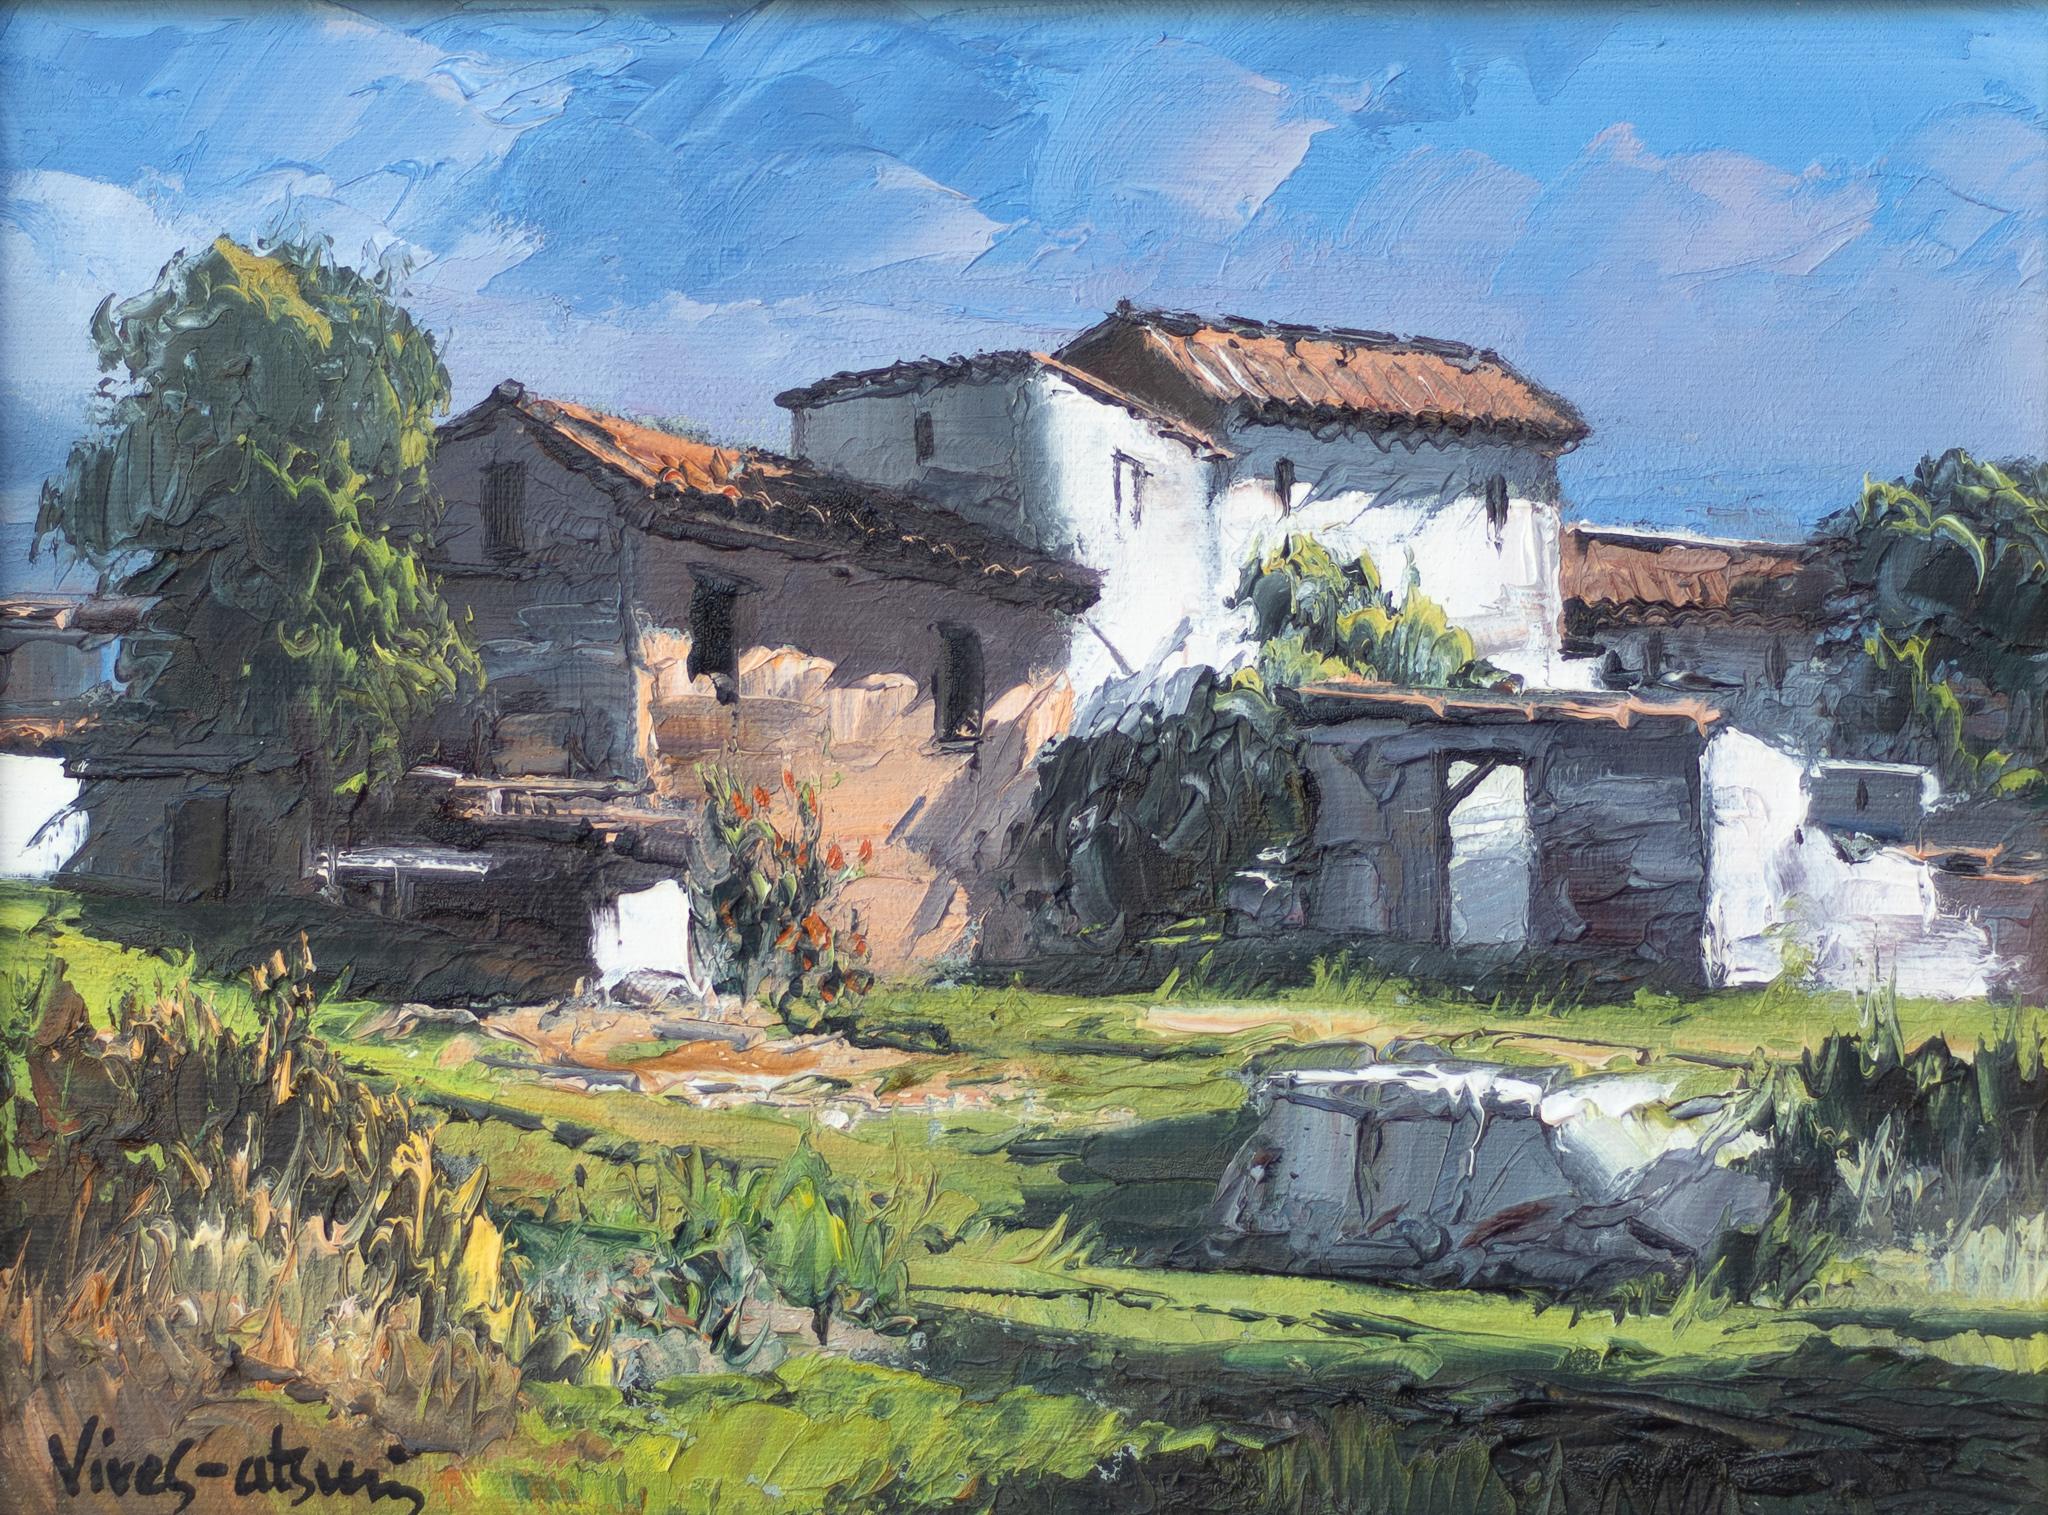 Jose Vives-Atsara Landscape Painting - "Catalonian Village" Sunny Impressionist Spanish Landscape with White Buildings